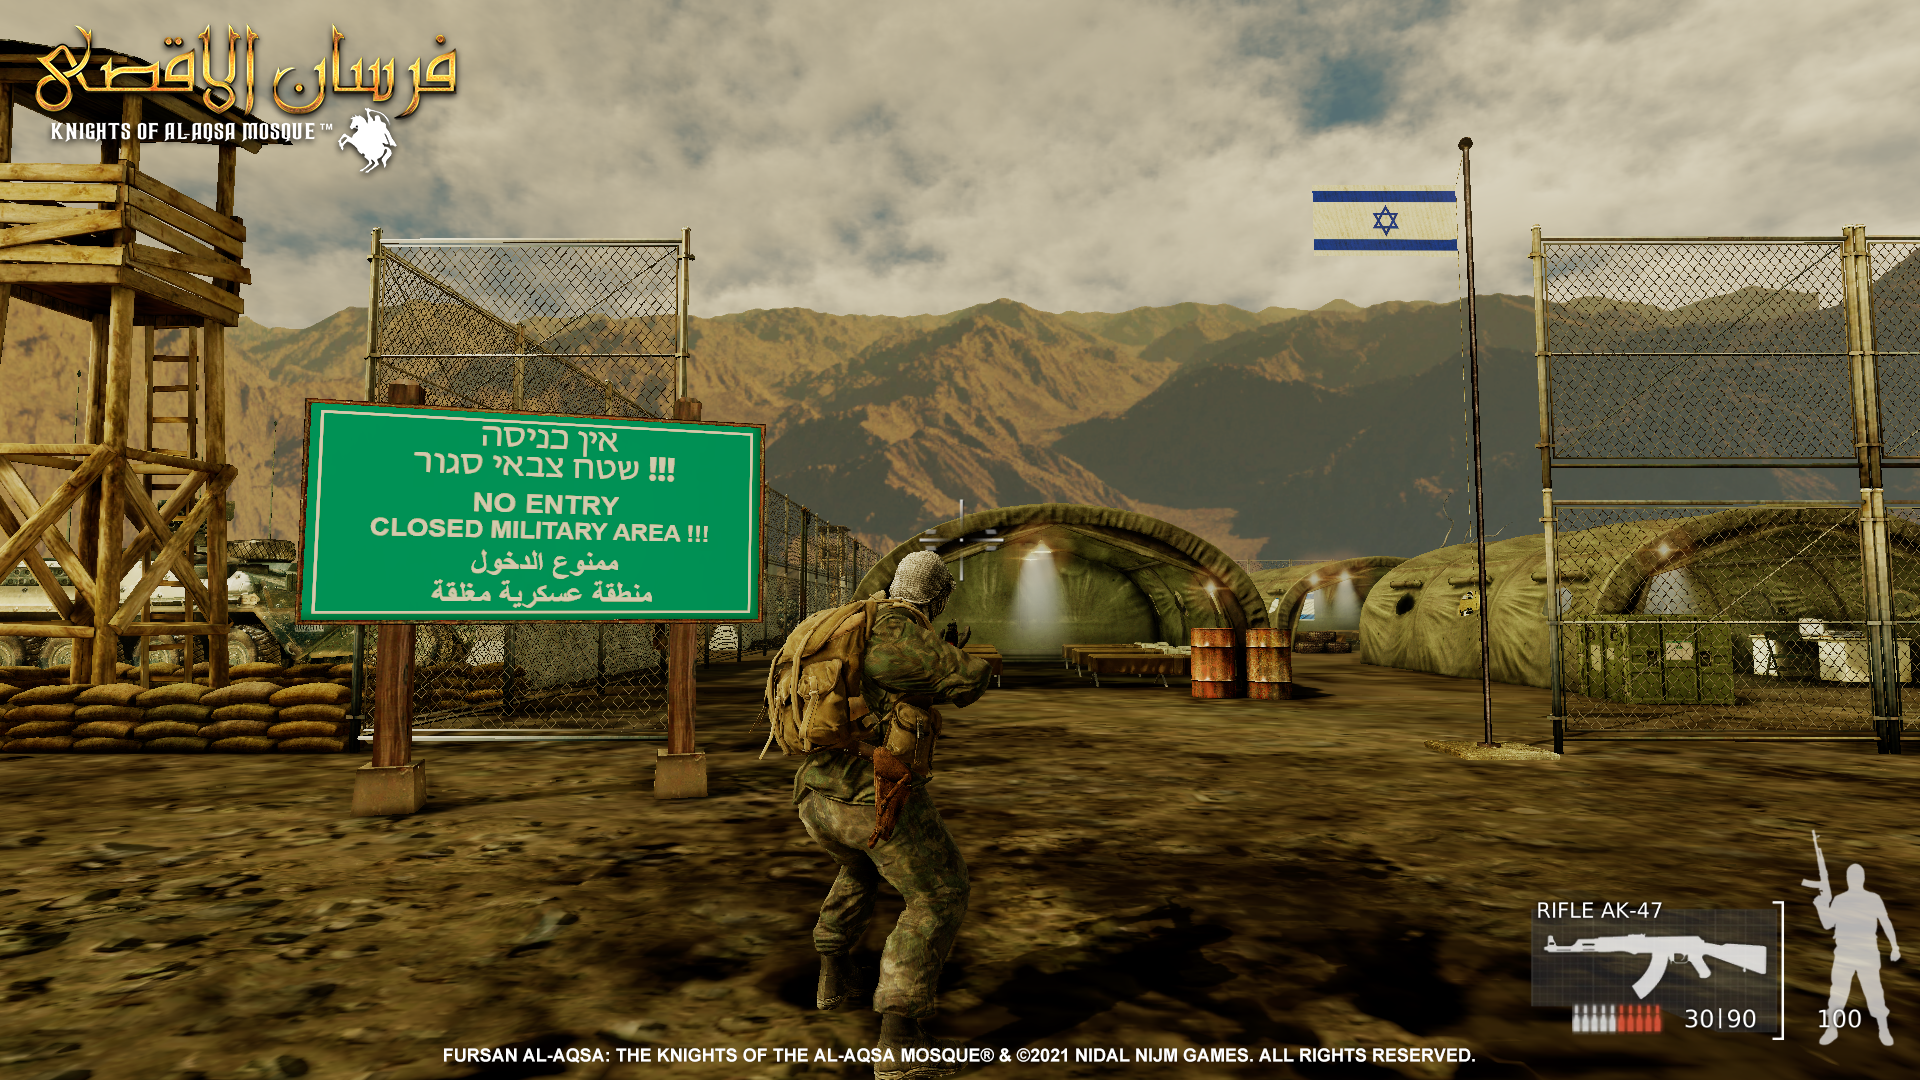 Fursan alAqsa  Showcase Shizafon Base 2 1 - I am developing a game about Palestine Resistance